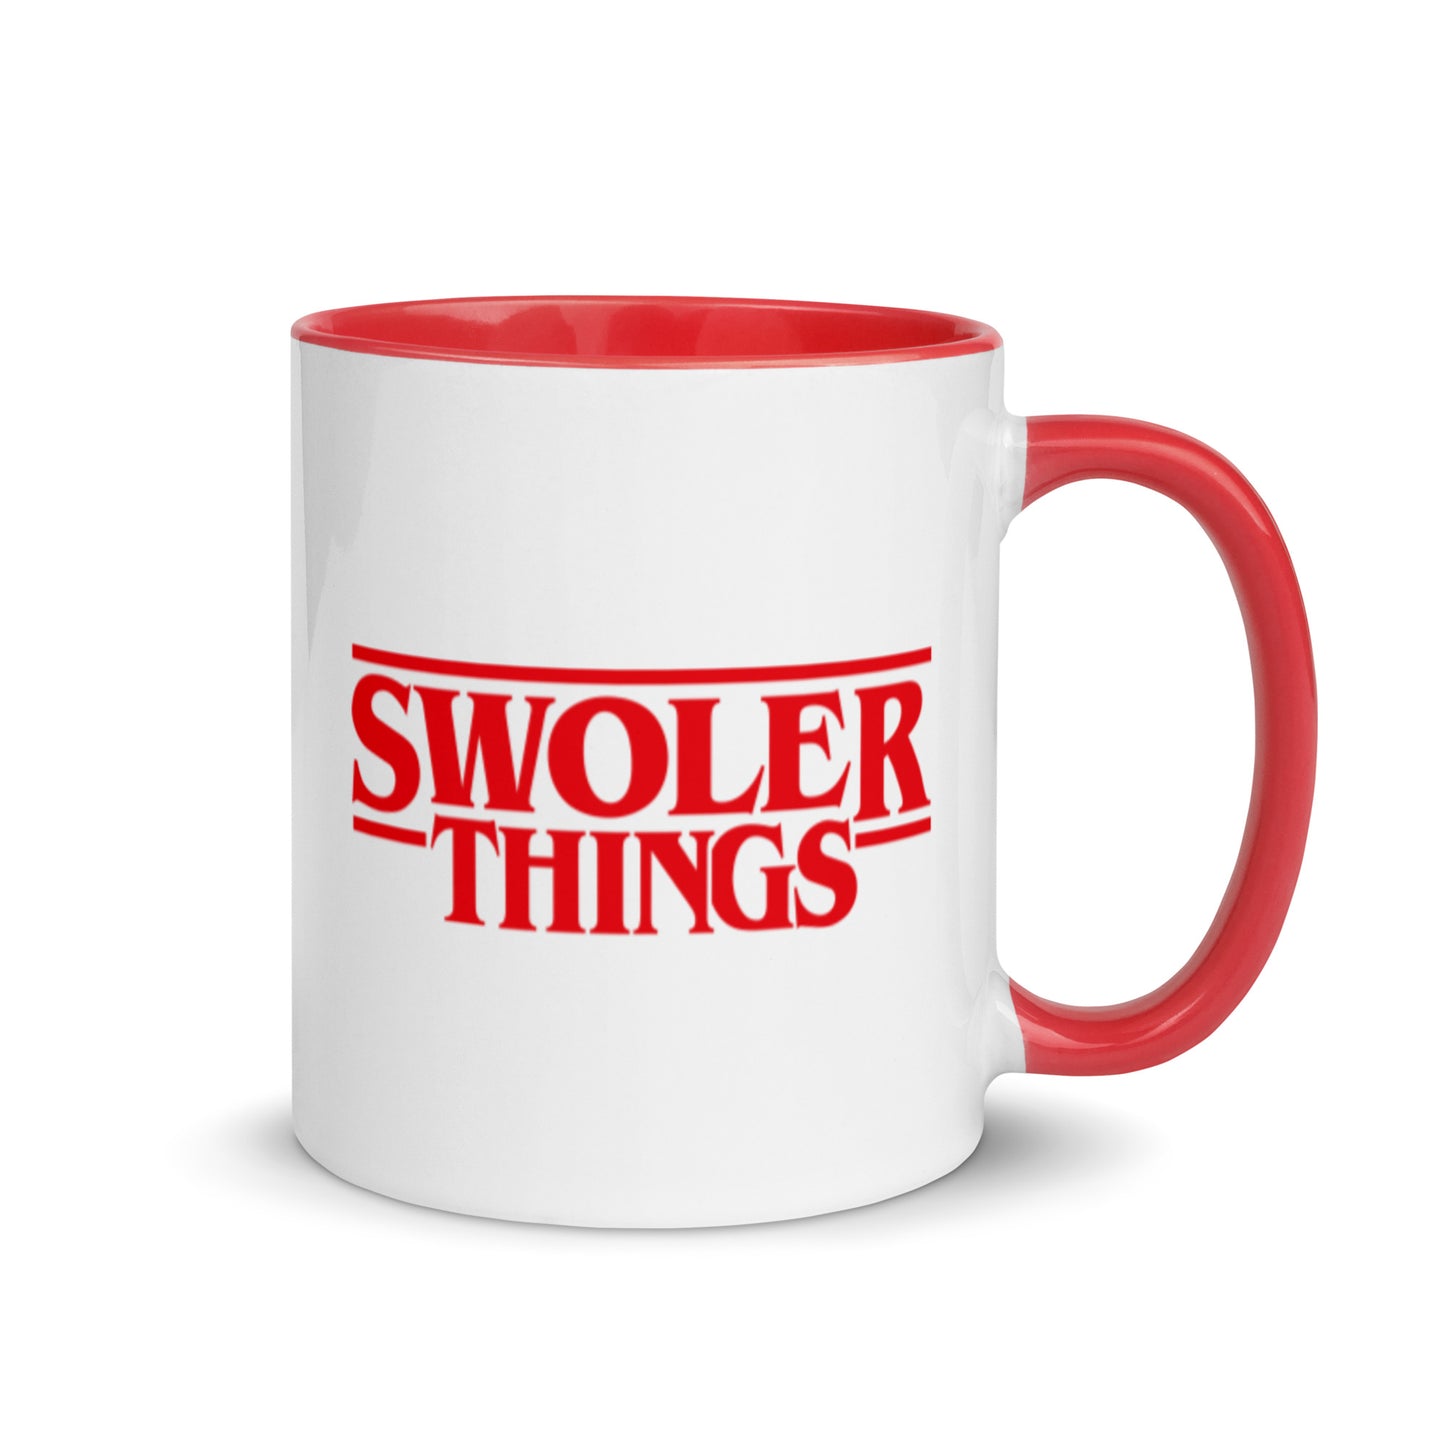 Swoler Things Mug